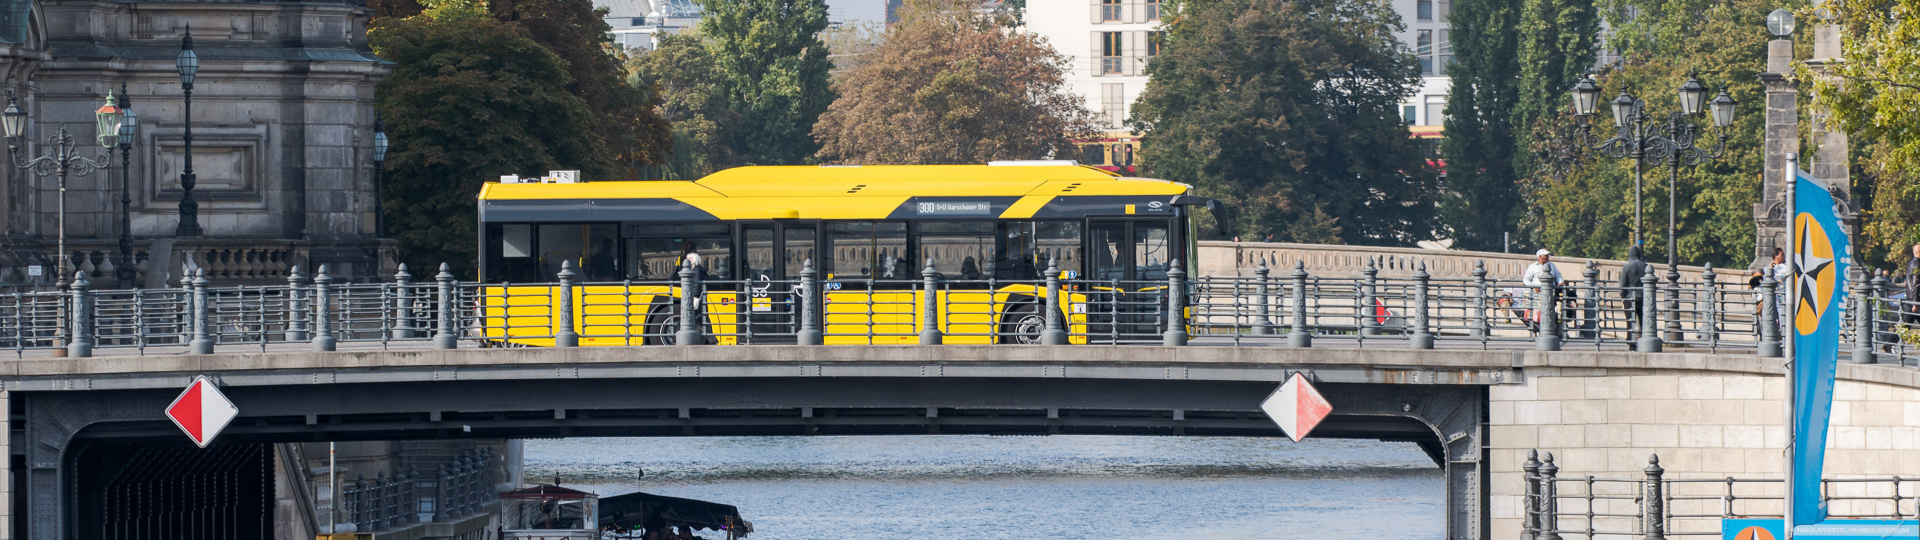 Berlin übernimmt 90 elektrische Solaris-Busse